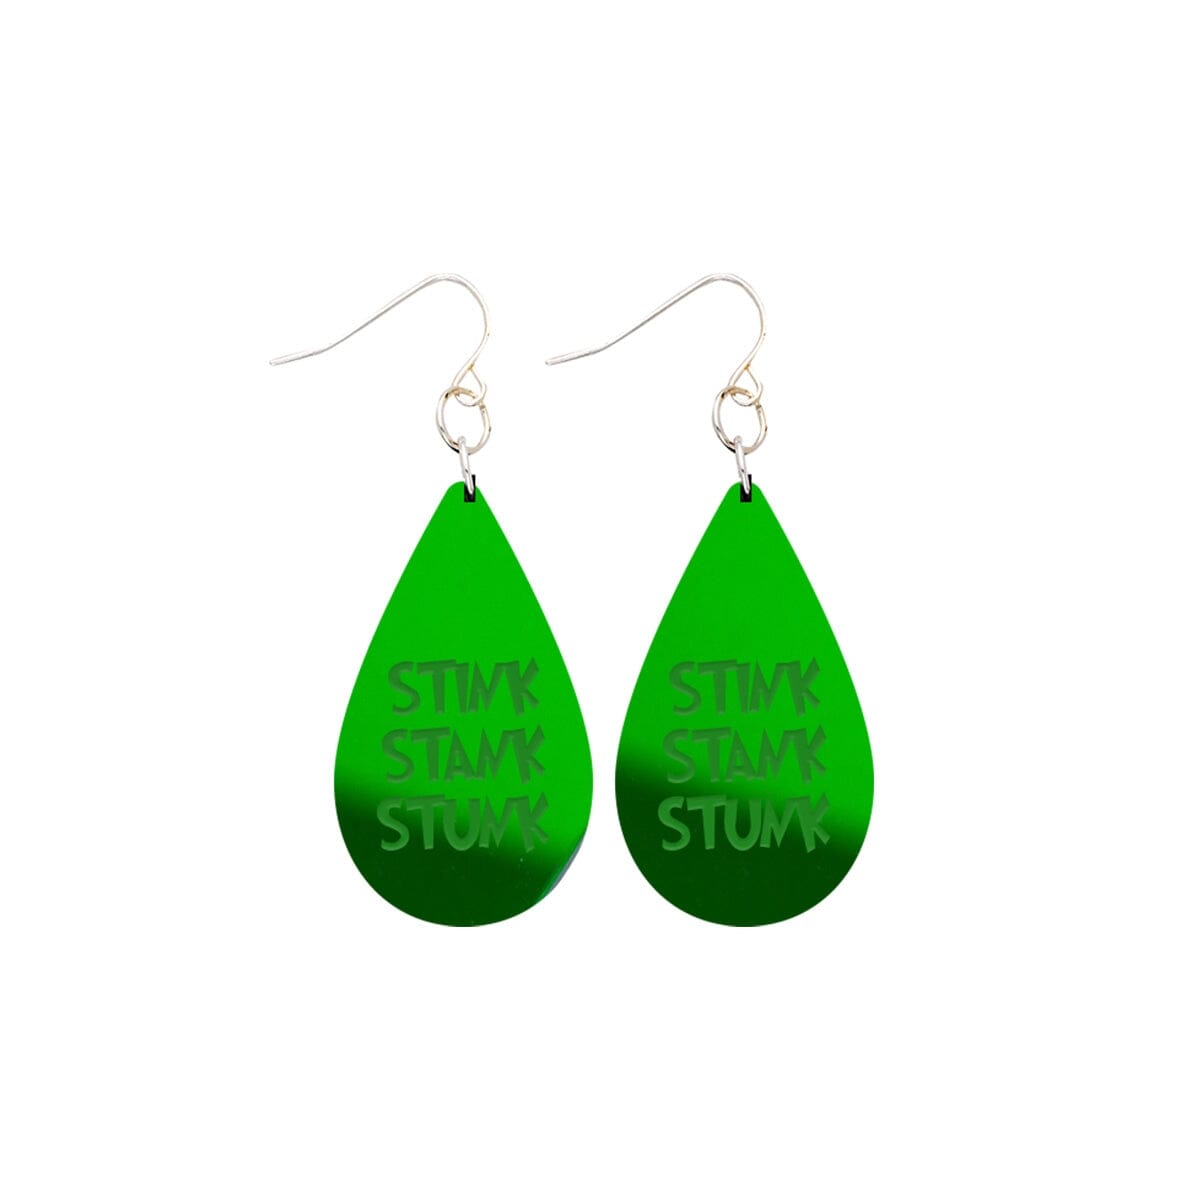 Stink, Stank, Stunk Mirrored Green Acrylic Earrings